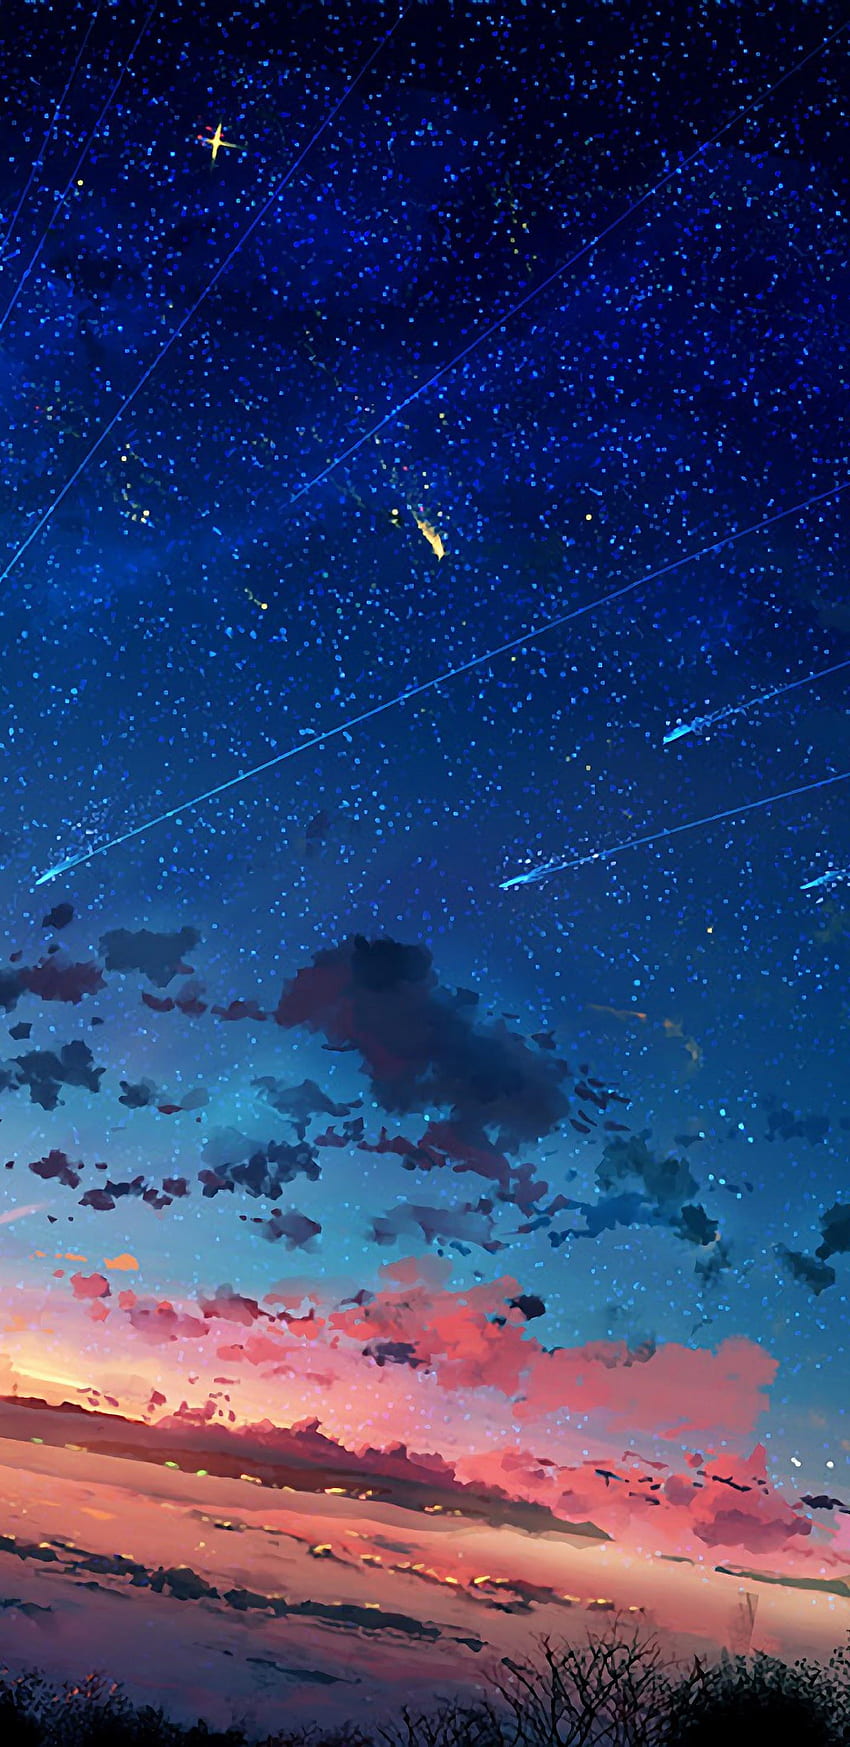 Beautiful Anime Landscape Sunset Scenery Digital Stock Illustration  2260828259 | Shutterstock